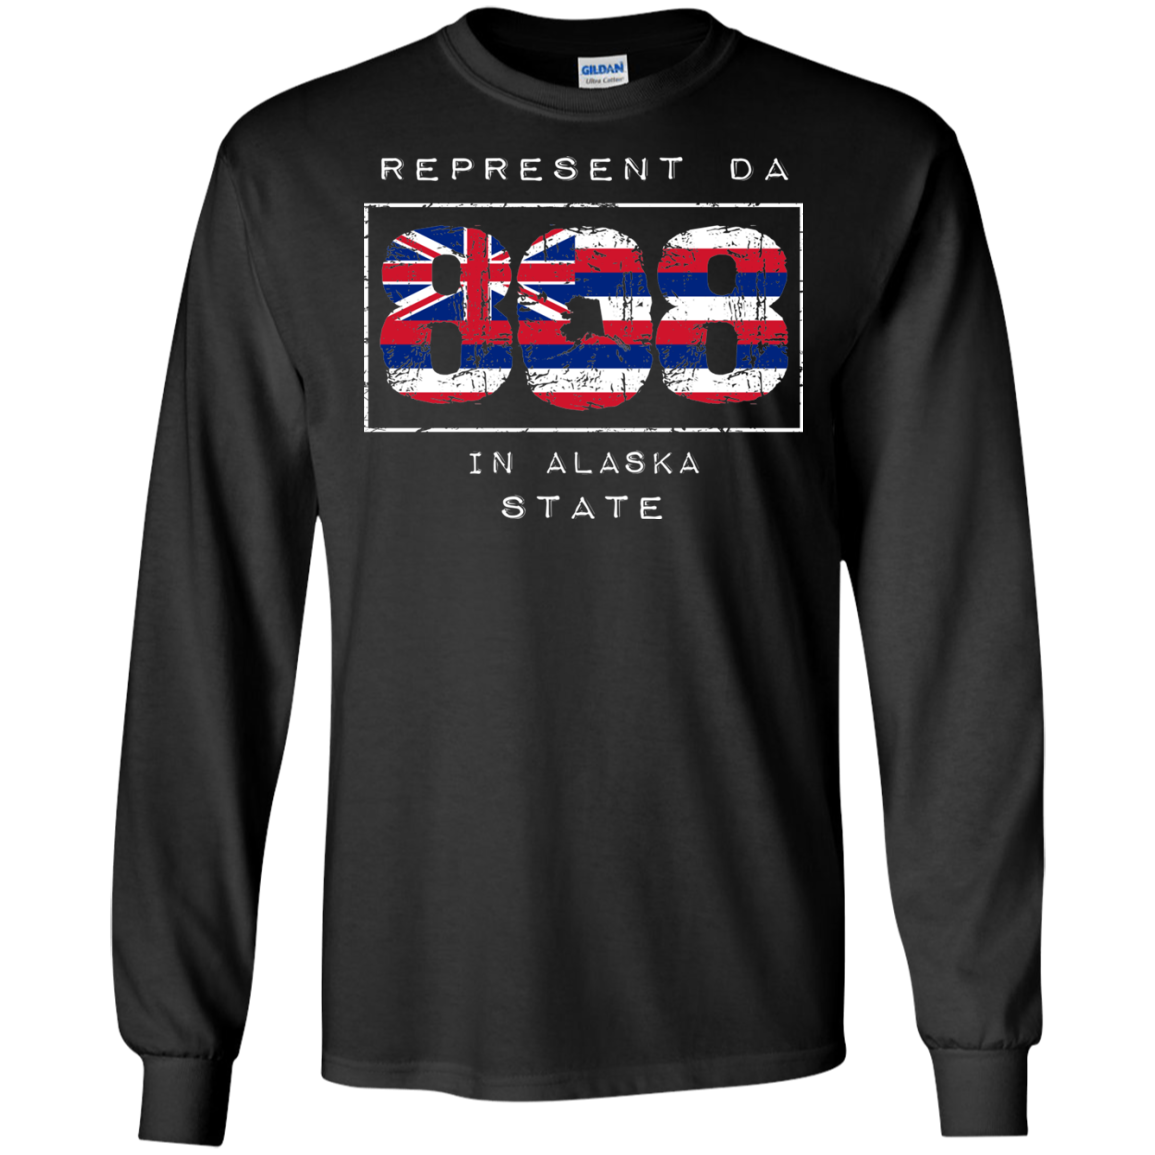 Rep Da 808 In Alaska State LS Ultra Cotton T-Shirt, T-Shirts, Hawaii Nei All Day